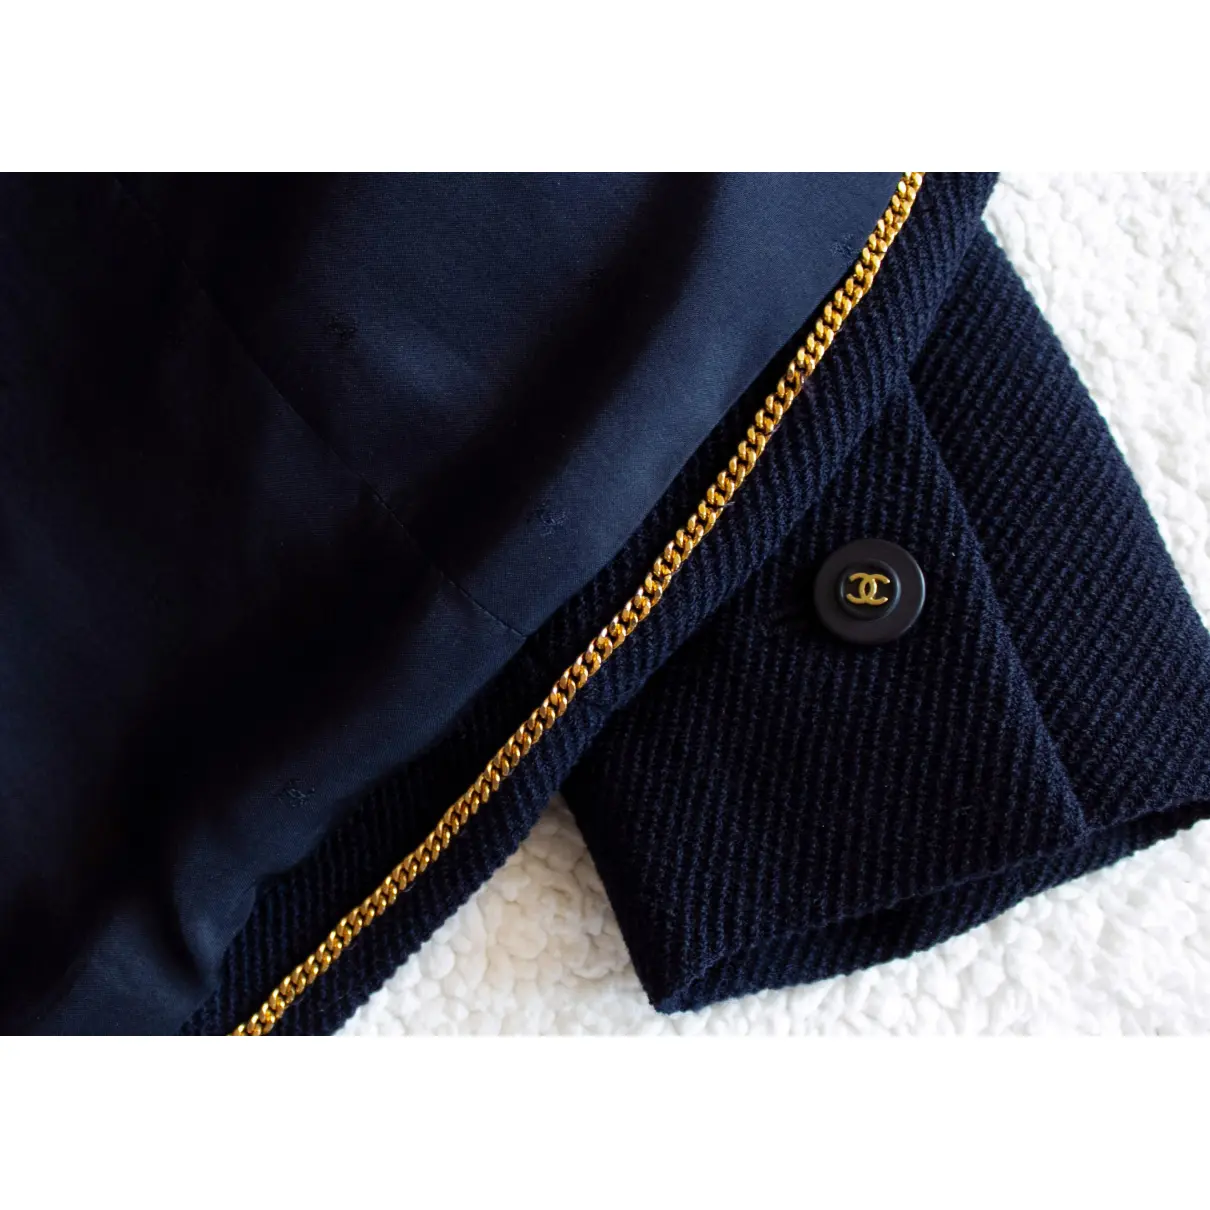 Tweed blazer Chanel - Vintage